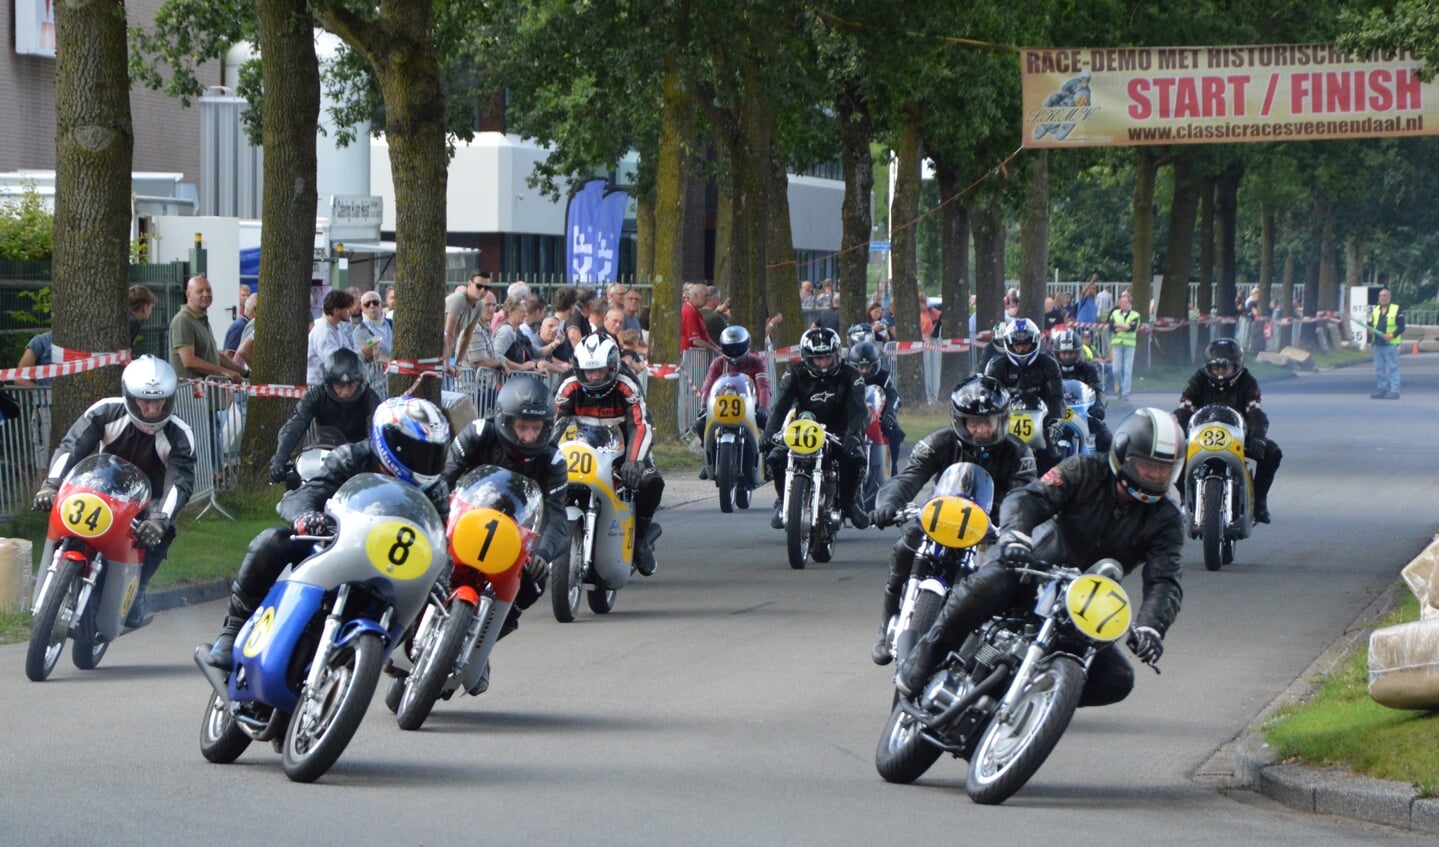 Classic Races Veenendaal